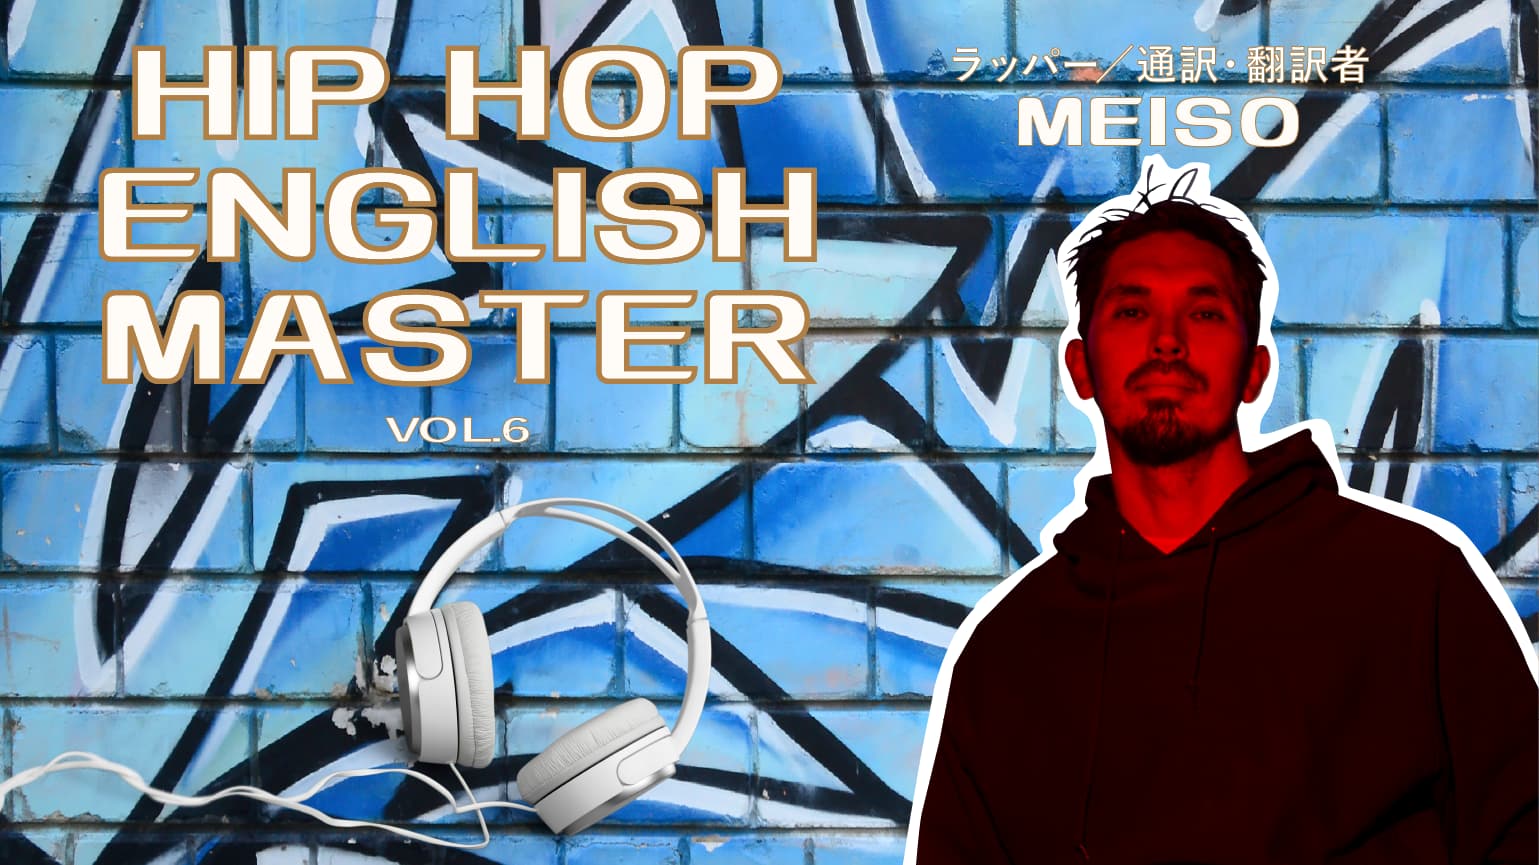 『HIP HOP ENGLISH MASTER』Vol.6